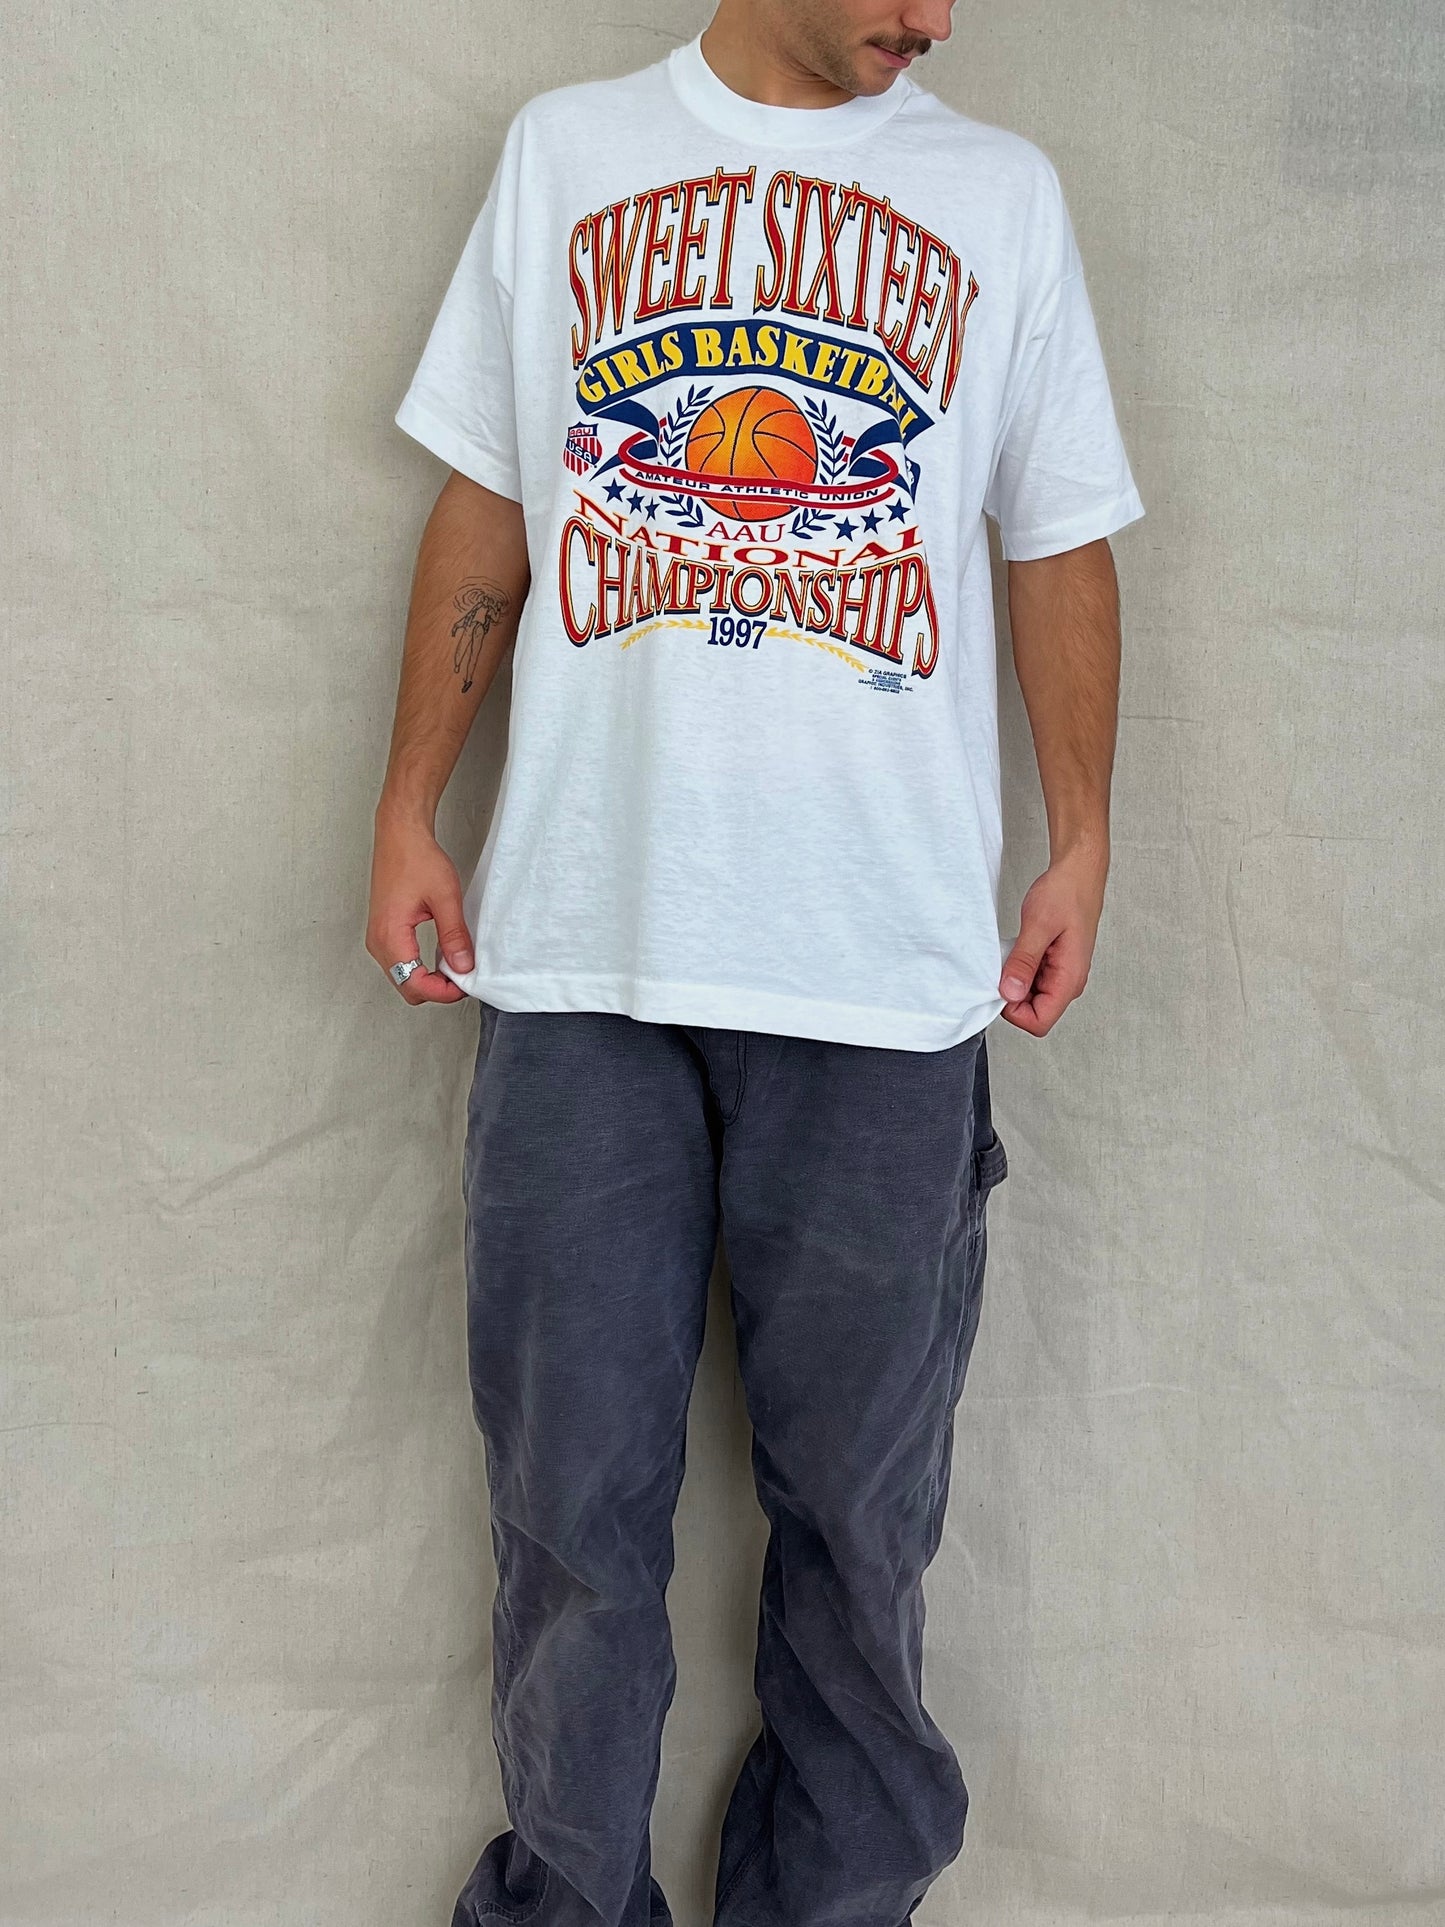 1997 Girls Basketball USA Made Vintage T-Shirt Size XL